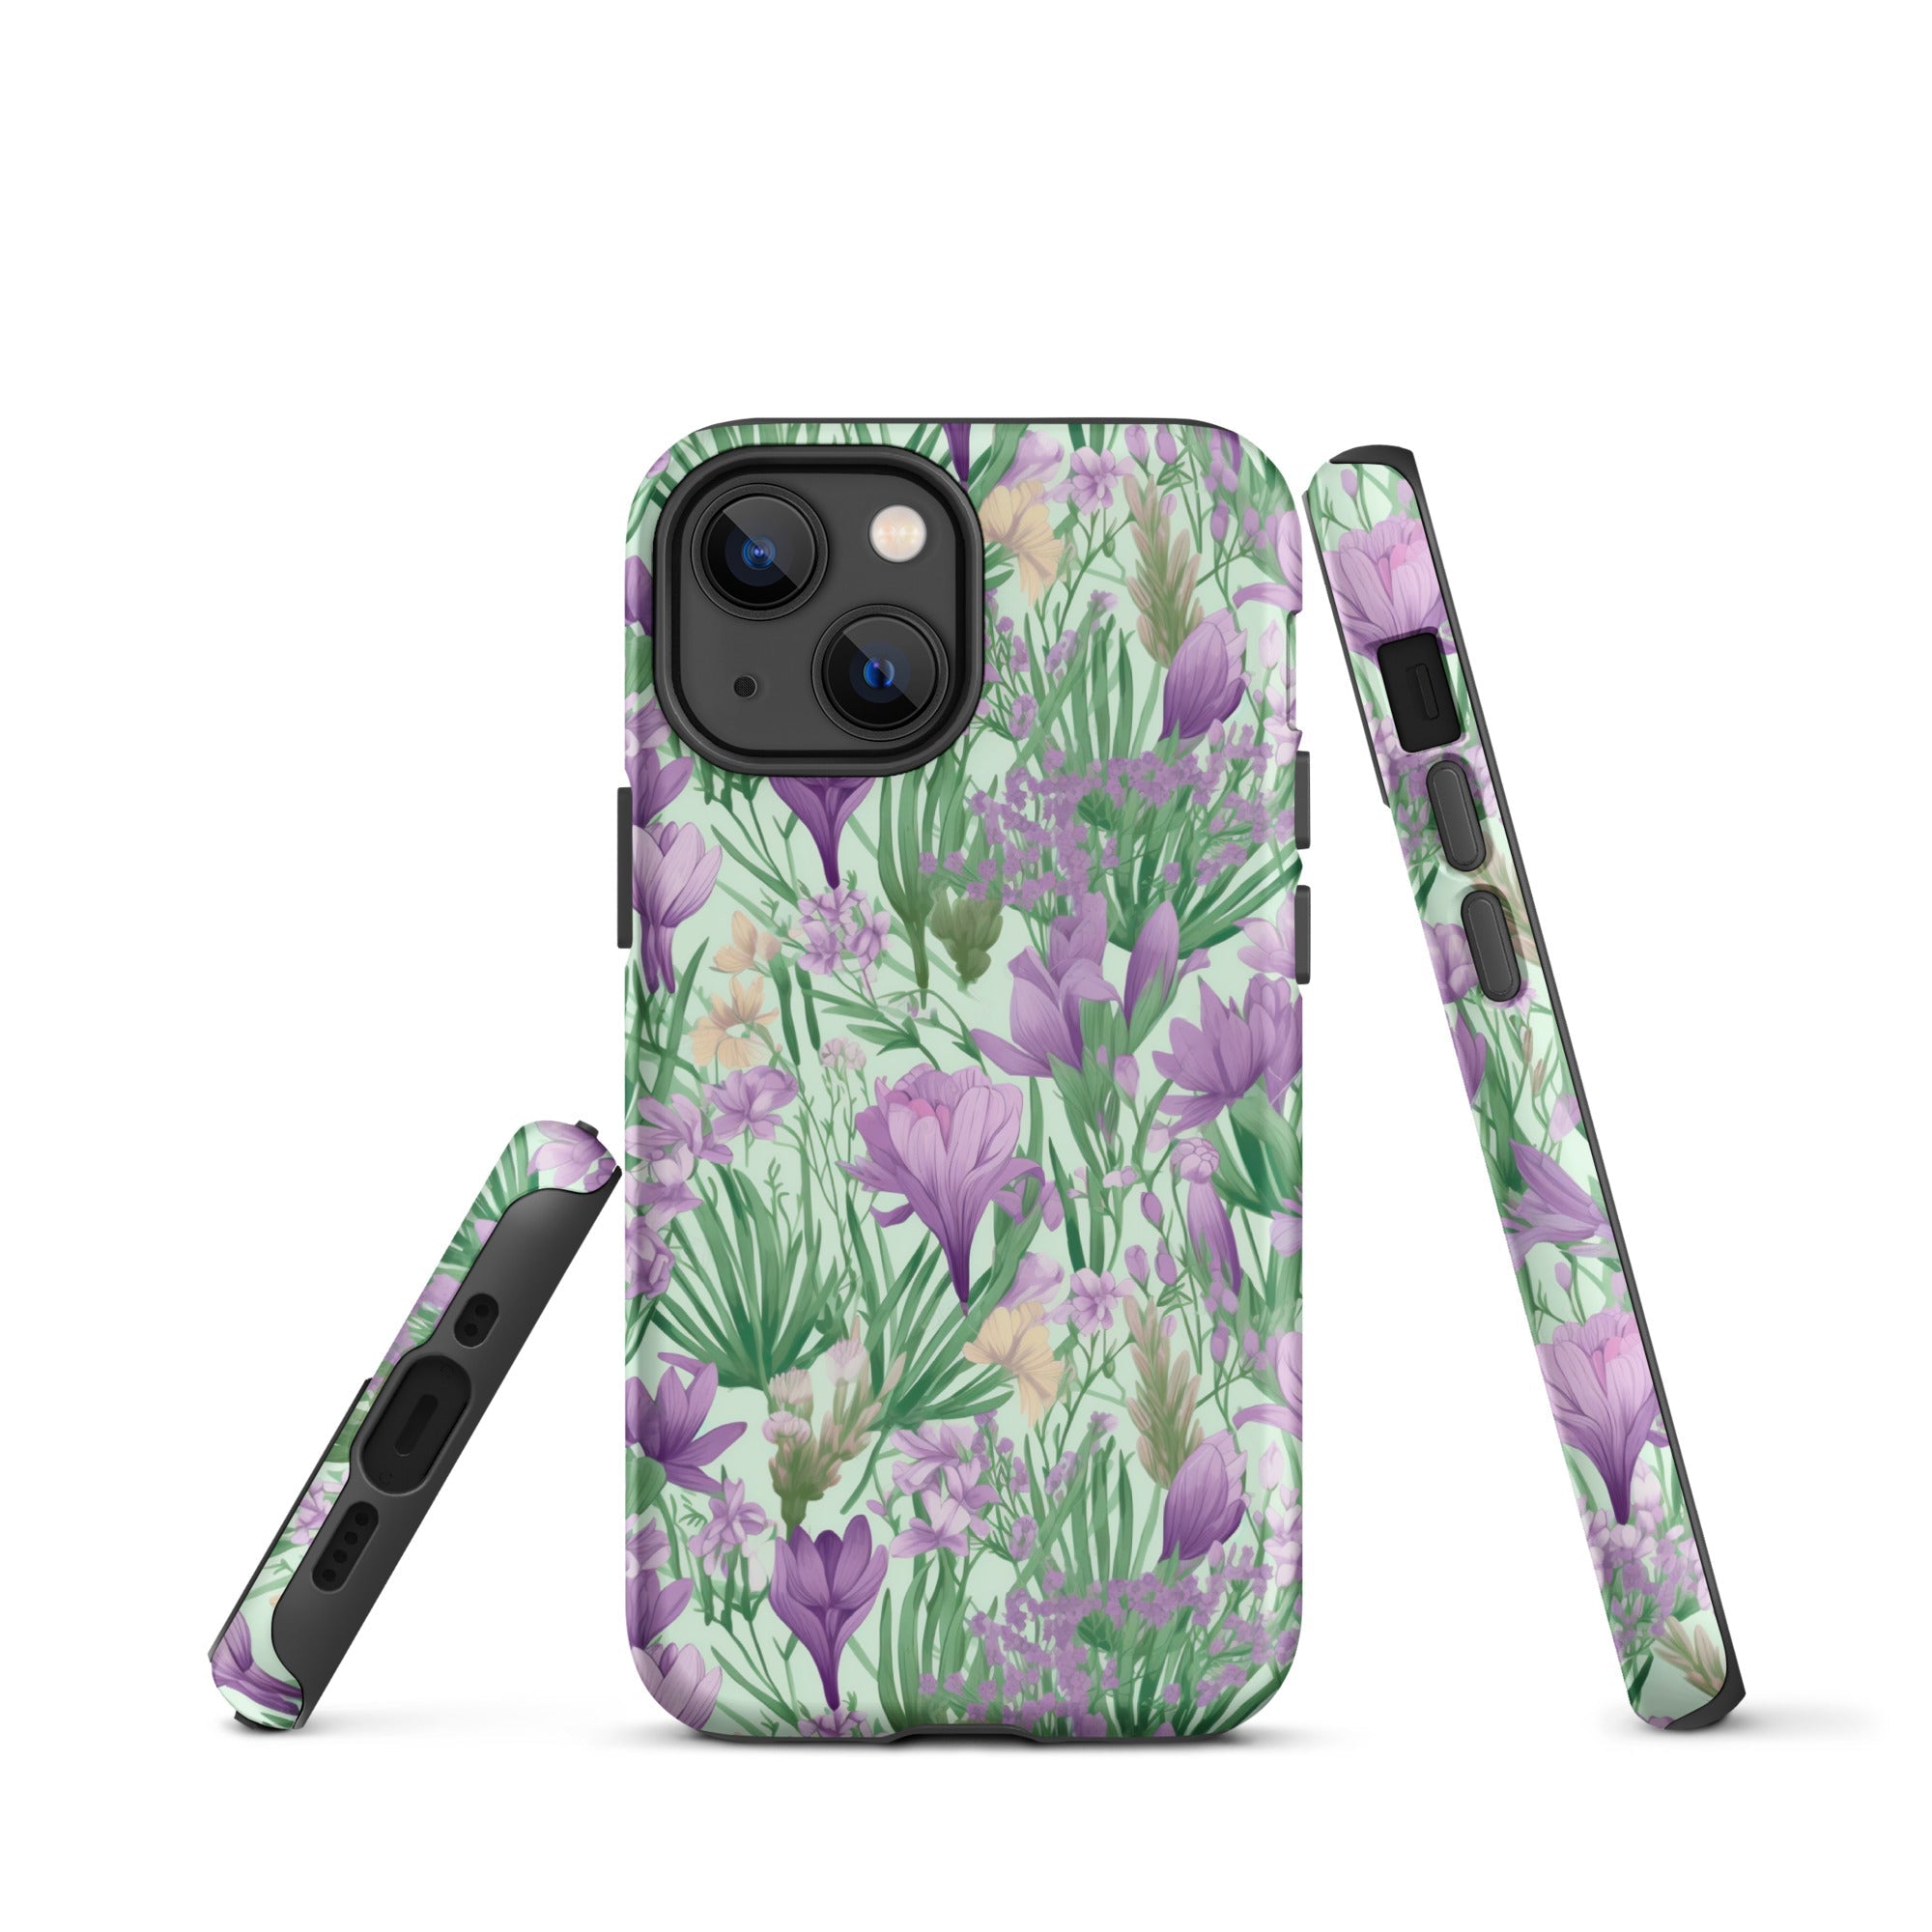 Lush Spring Garden - Purple Crocuses, Lavender Iris, and Hyacinth - iPhone Case - Pattern Symphony